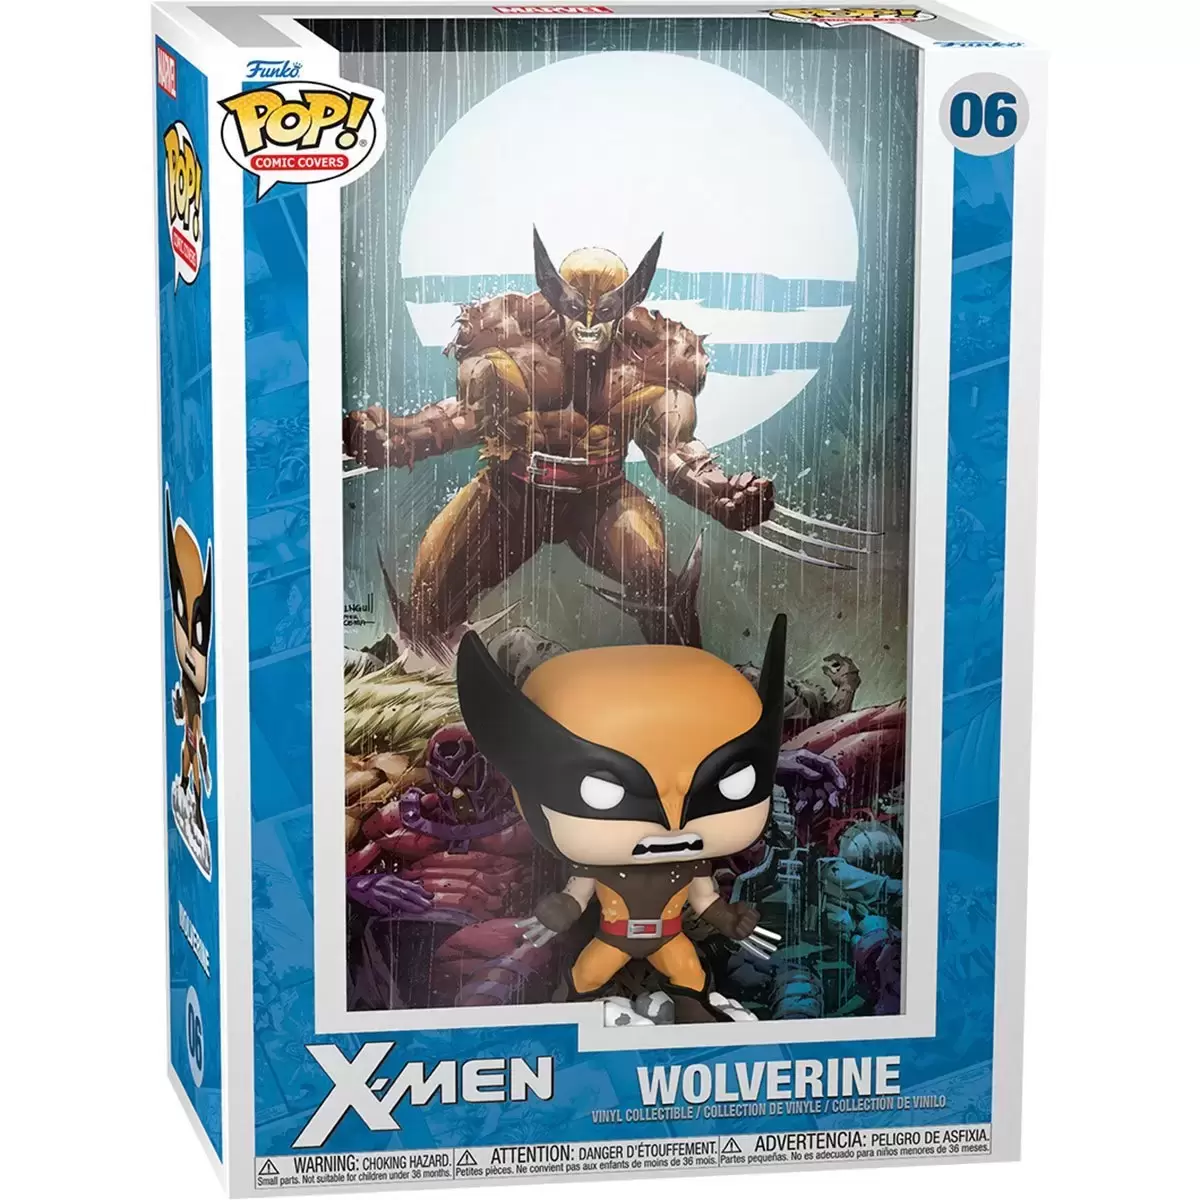 POP! Comic Covers - Marvel Comics Cover - Wolverine